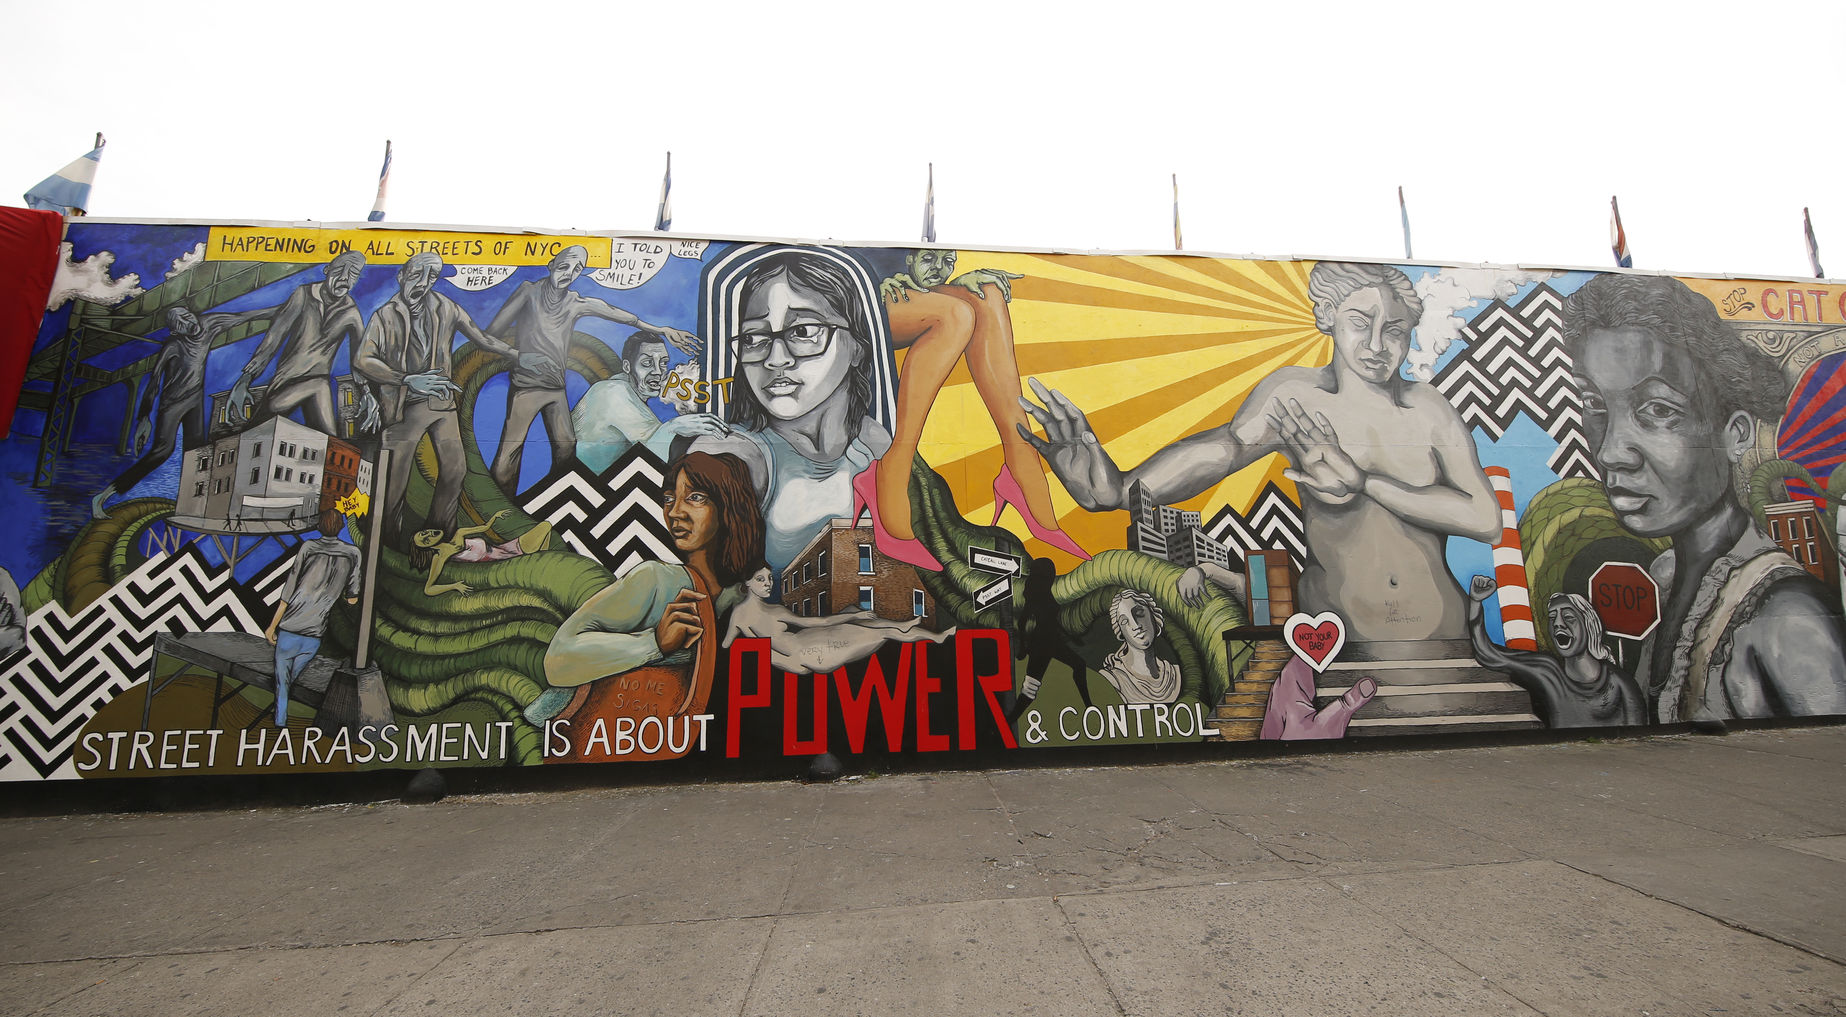 50813207 - new york - january 7, 2016: street harassment themed mural in brooklyn